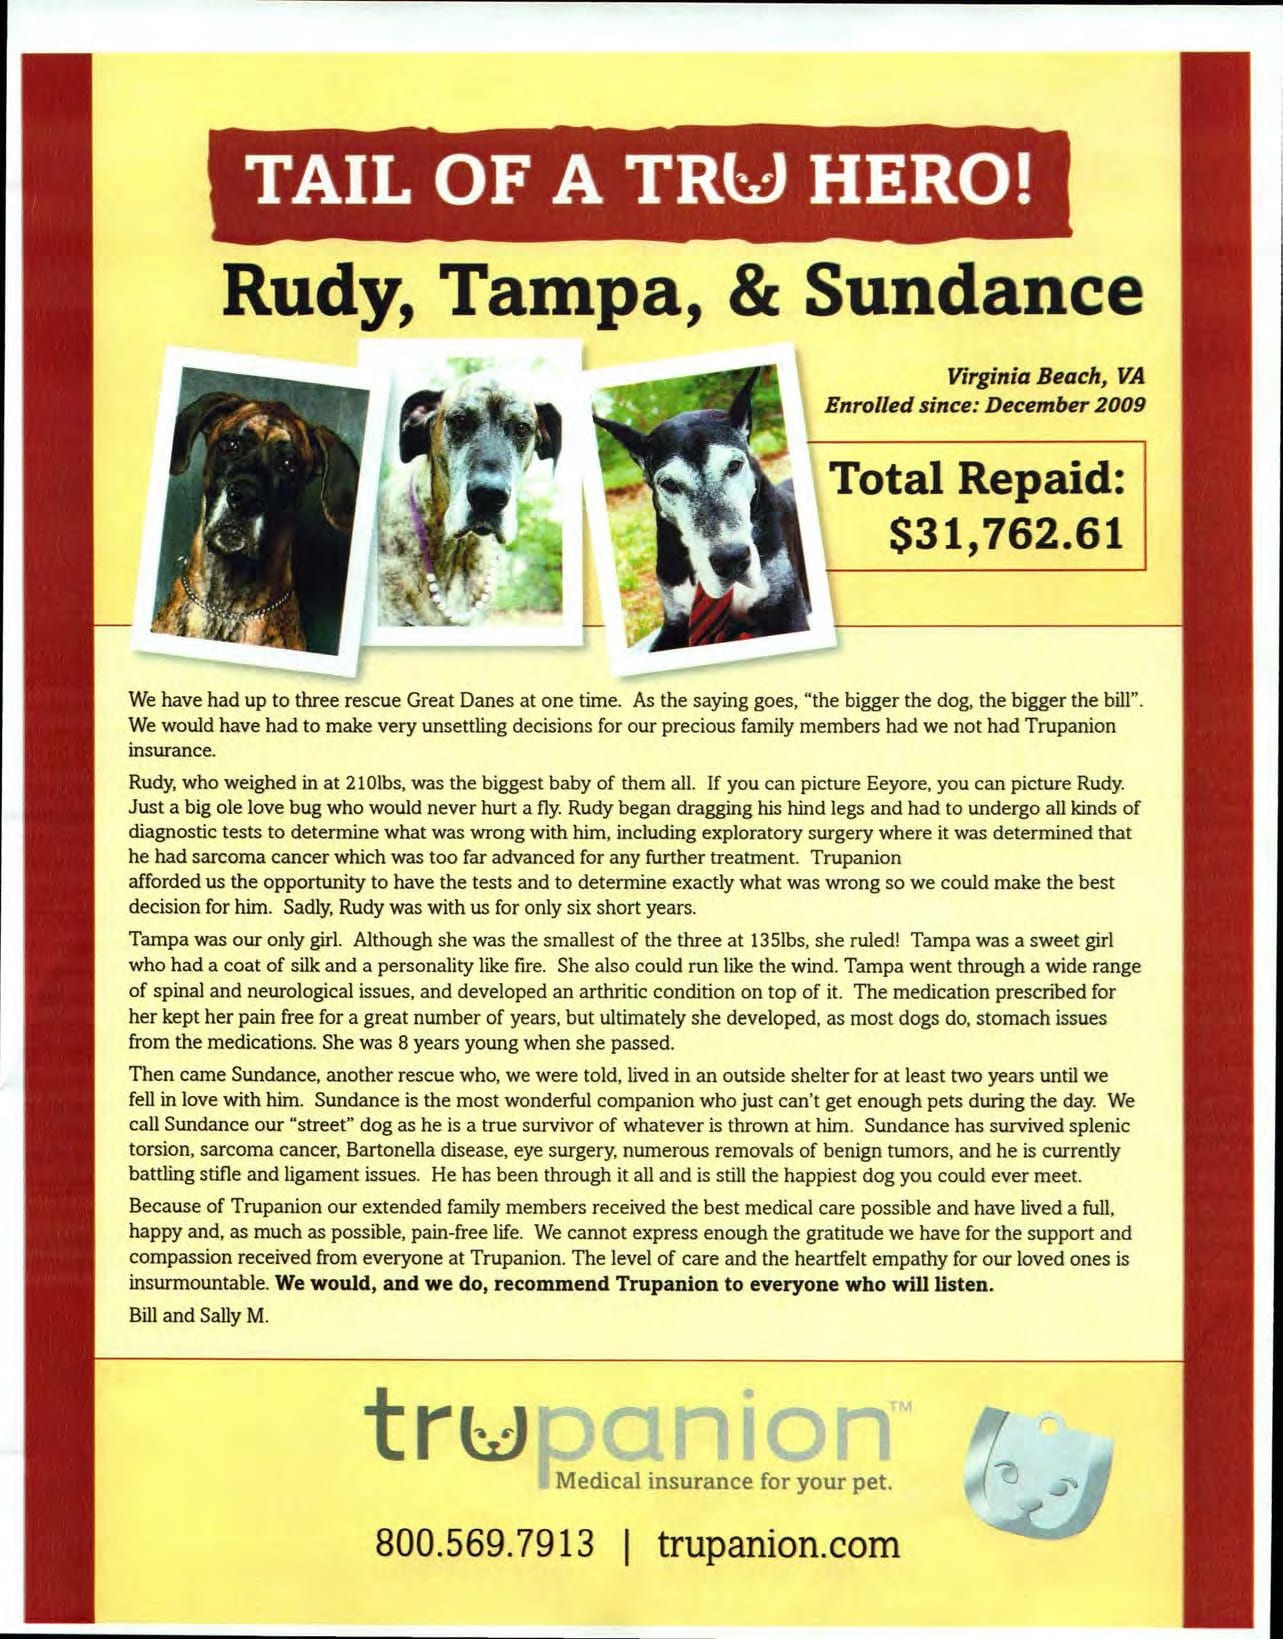 Rudy, Tampa and Sundance